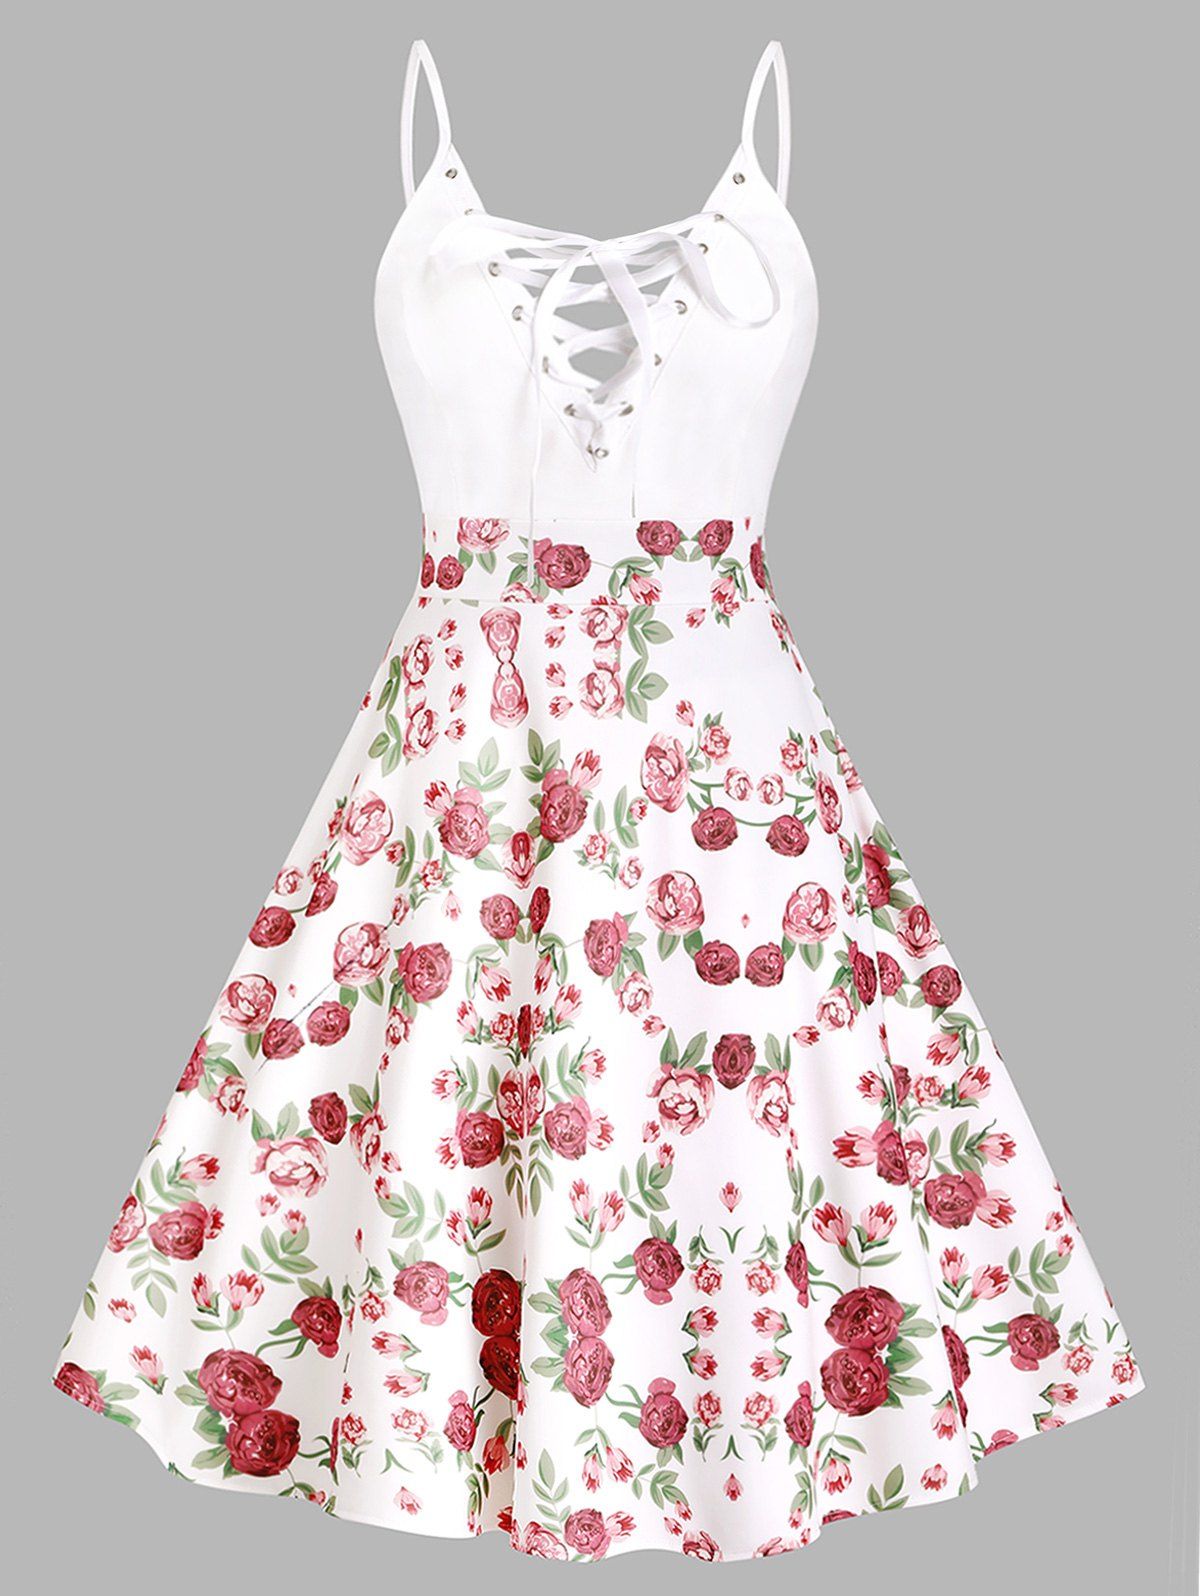 Floral Print Lace Up Cami Dress - LIGHT PINK L